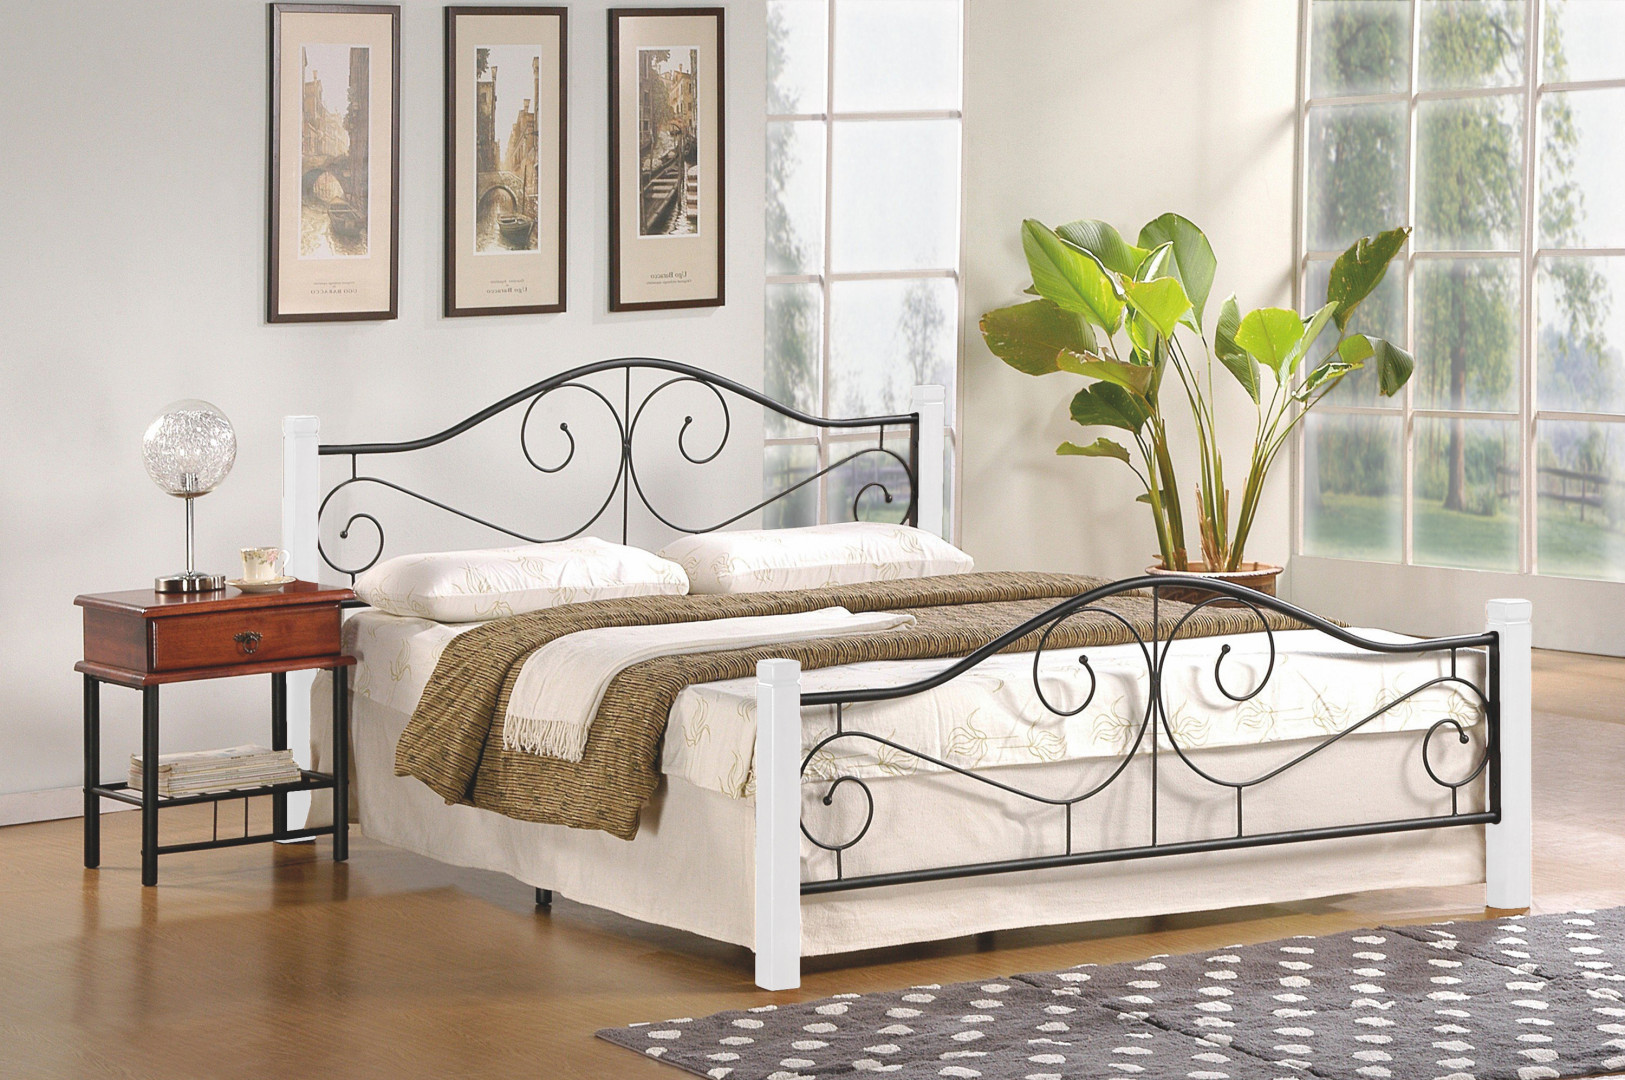 Łóżko Violetta 160 - elegancja i komfort